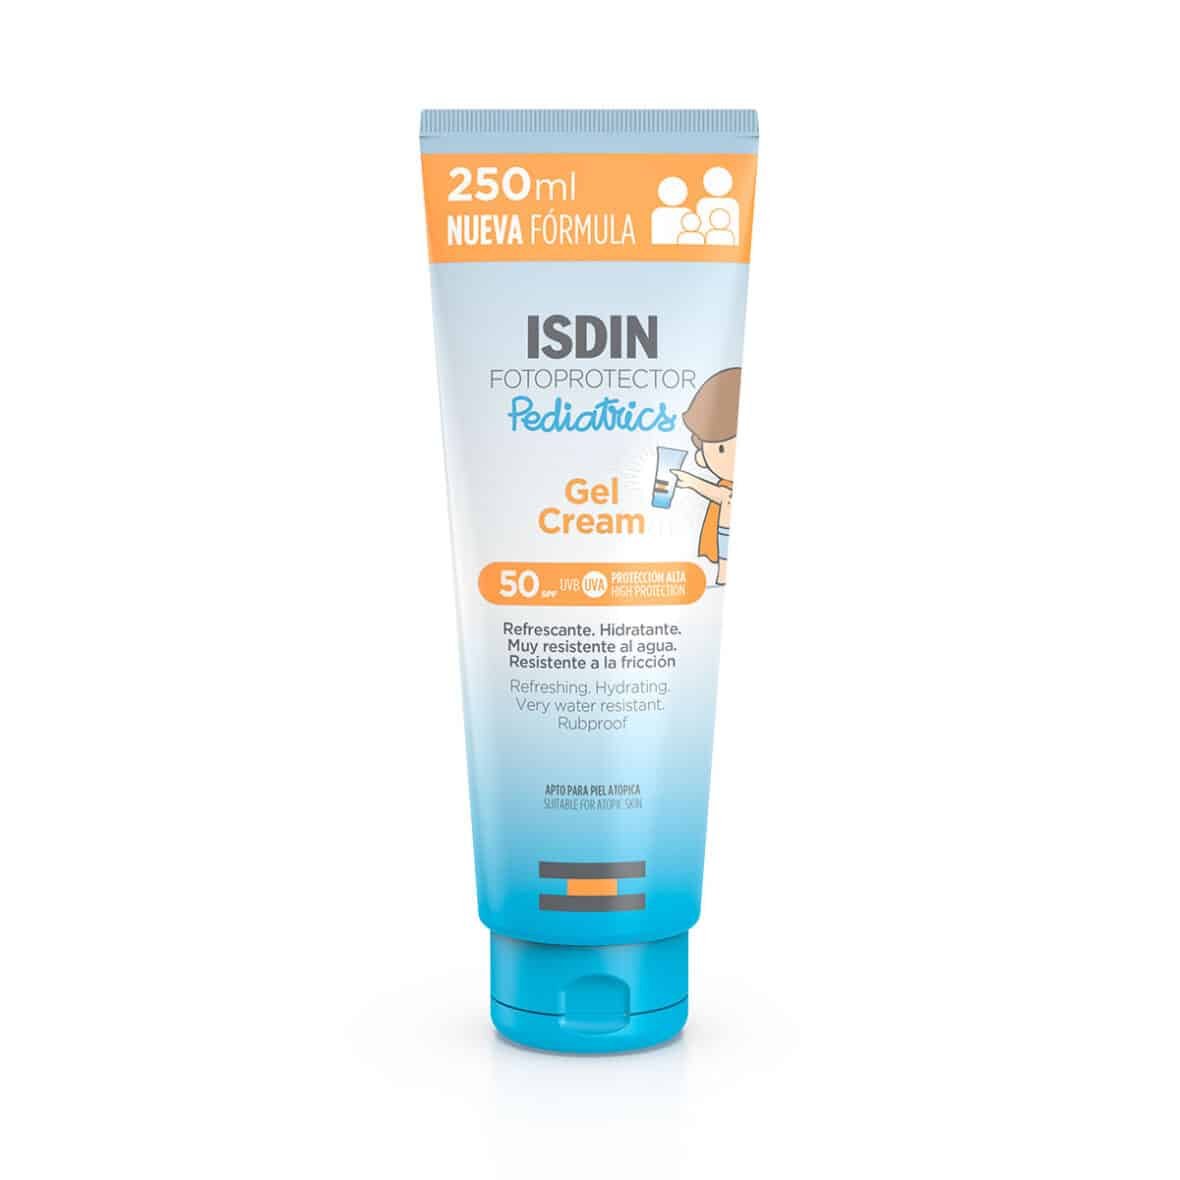 ISDIN Fotoprotector ISDIN Gel Cream Pediatrics SPF 50+ 250ml